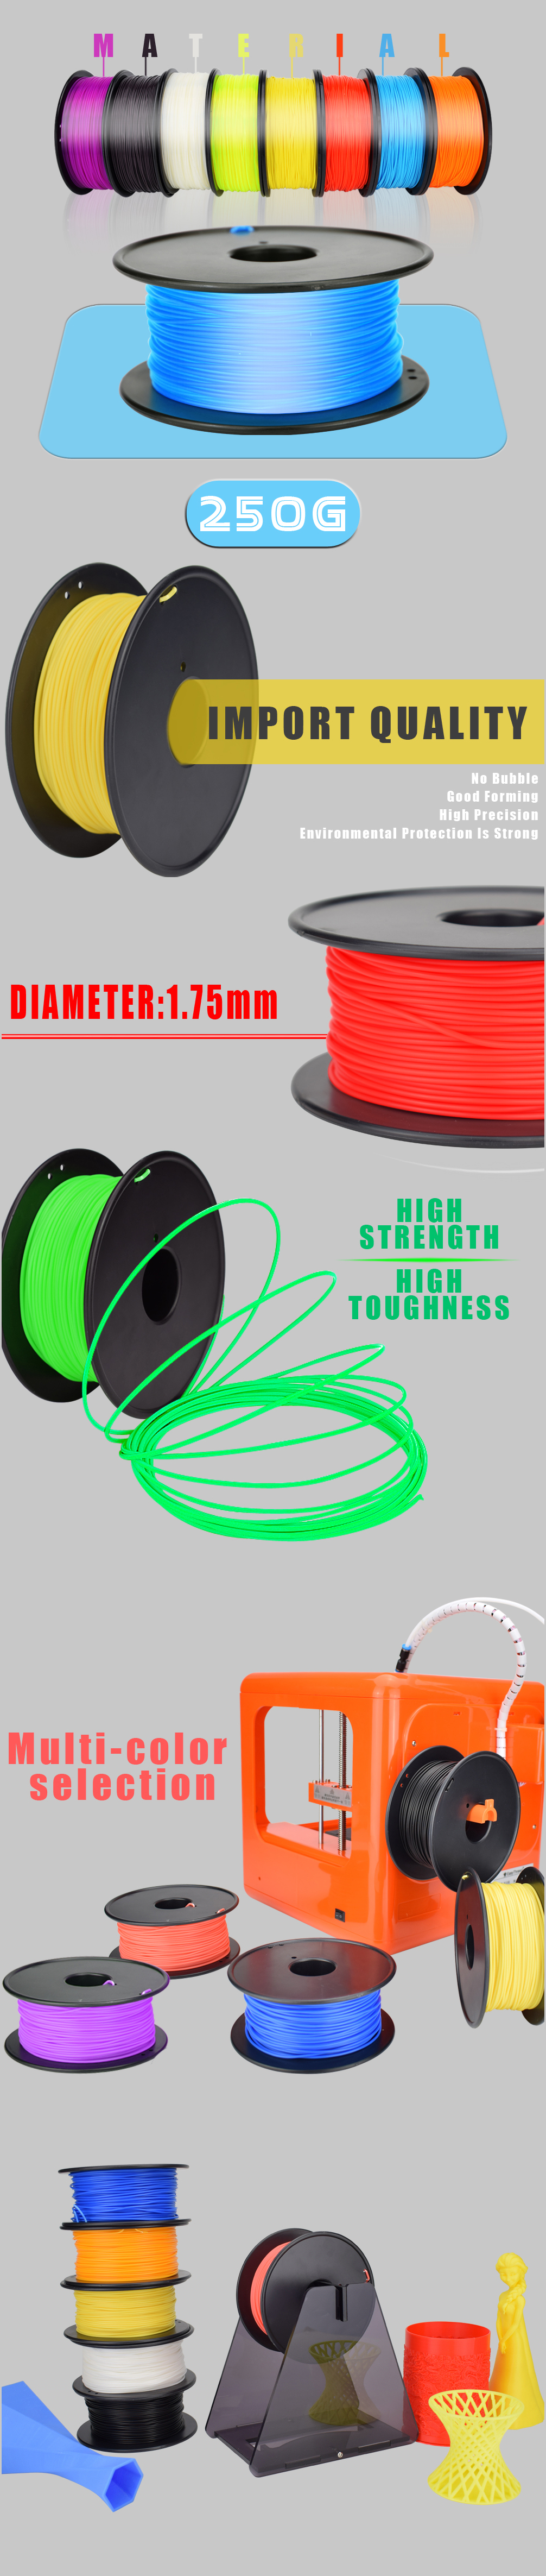 Easythreed® 250g/Roll 1.75mm PLA 3D Printer Filament 13